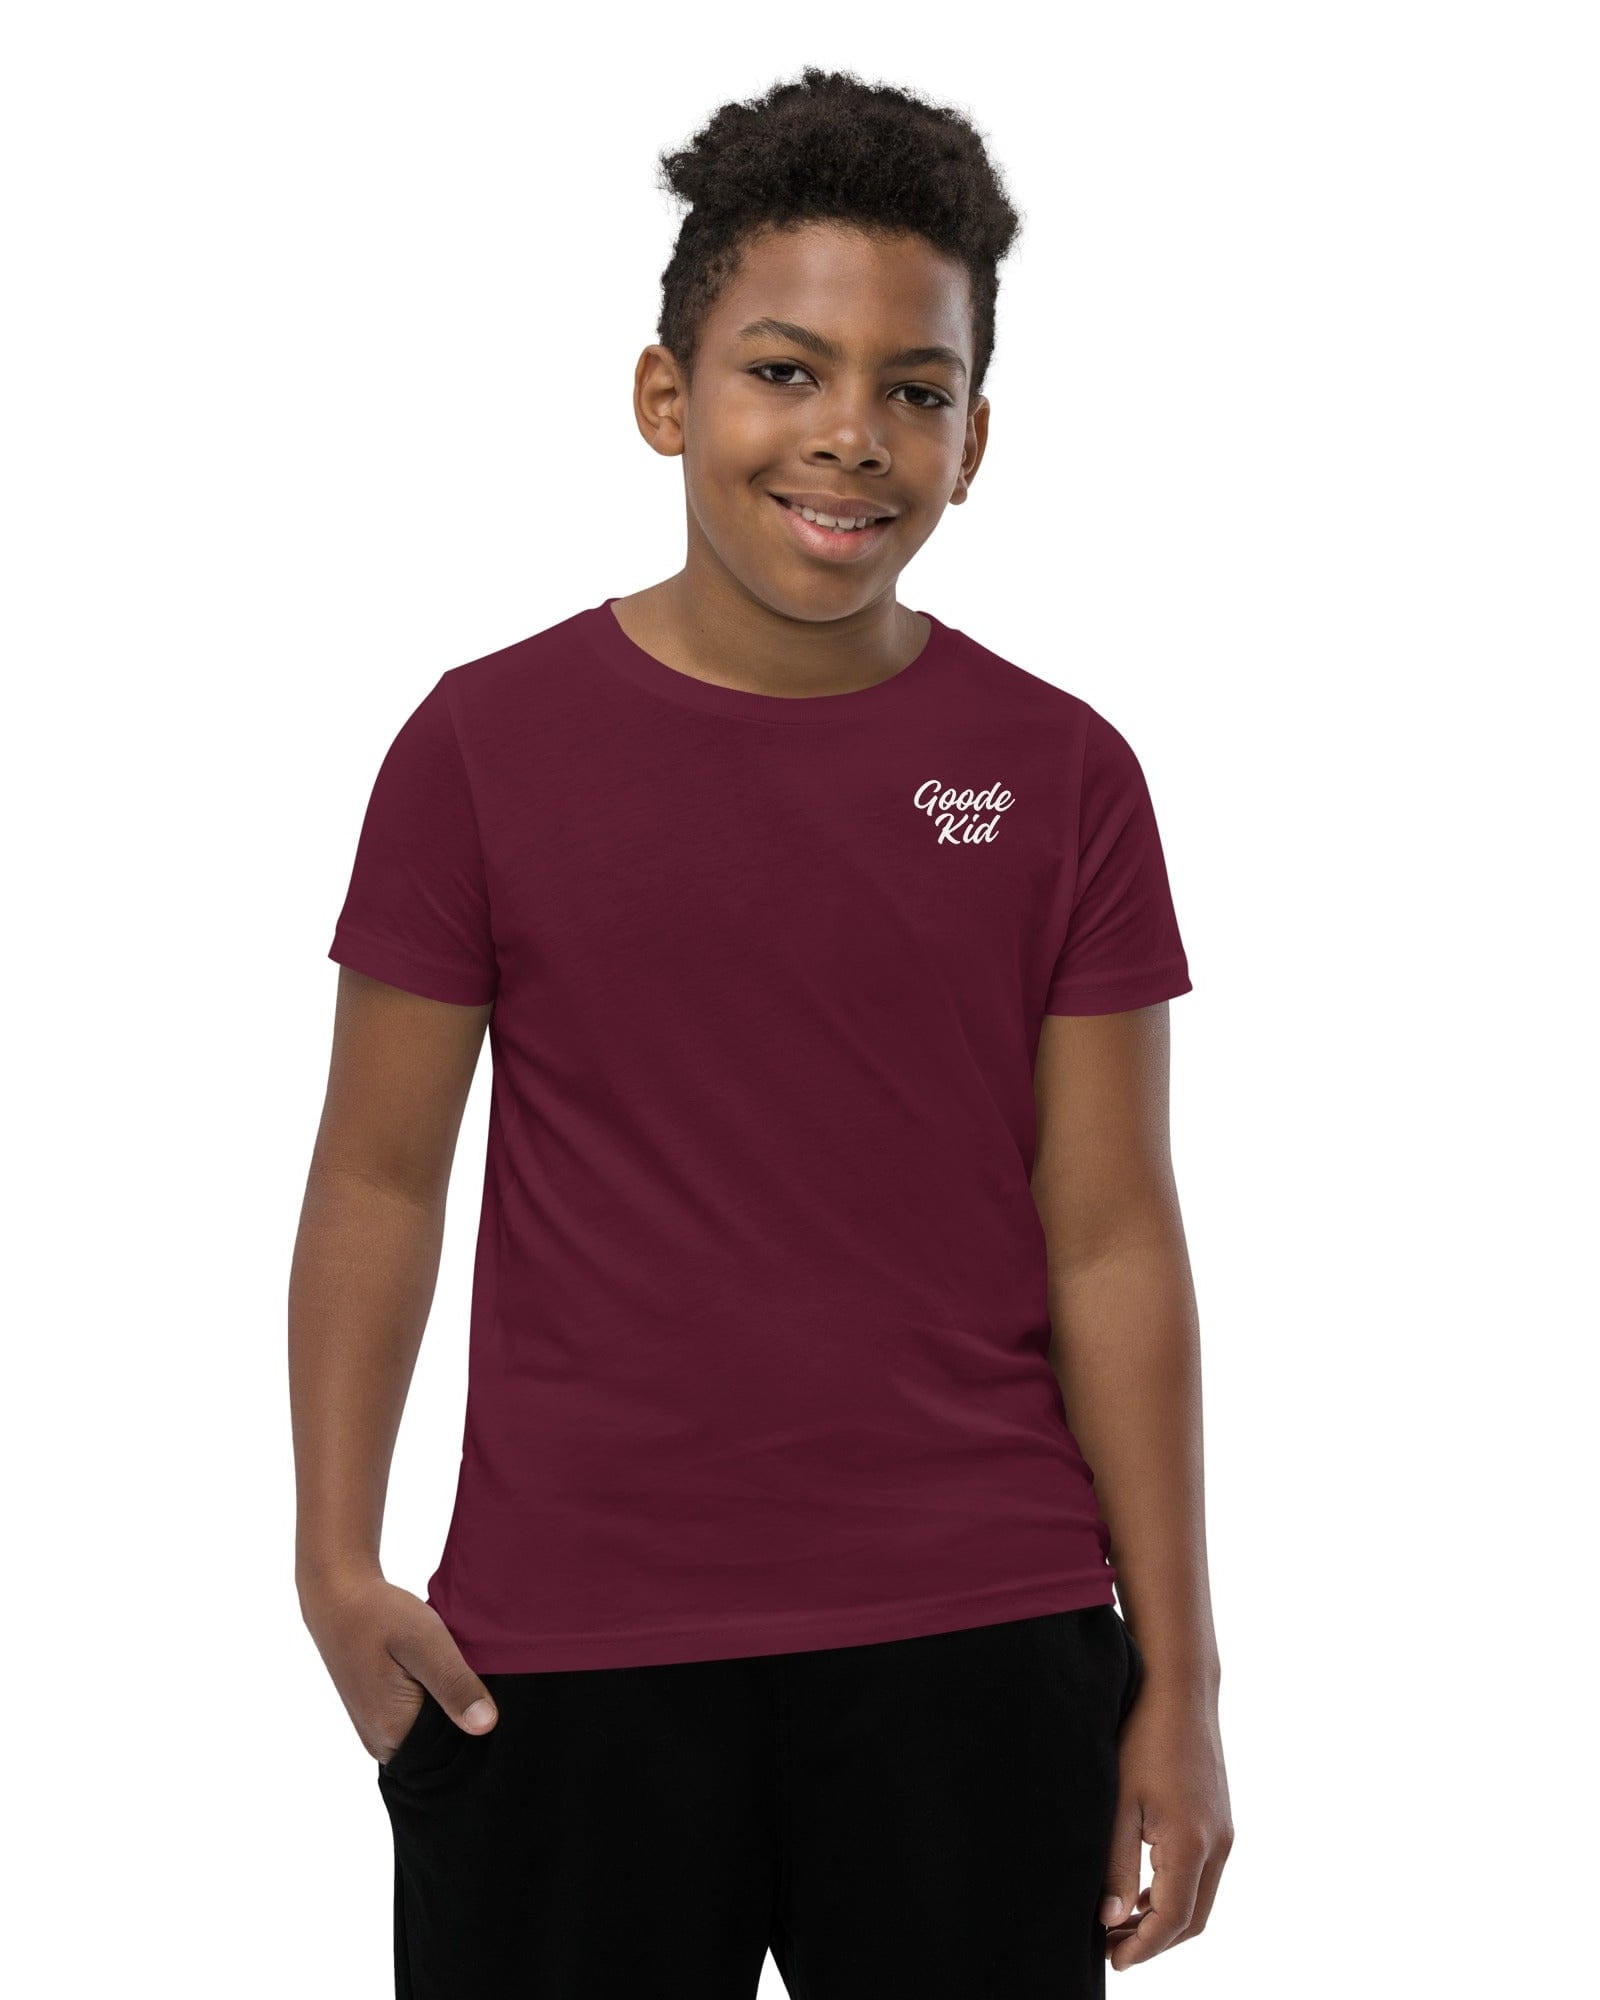 Goode Kid T-shirt | Youth Maroon / S kids t-shirts Jolly & Goode